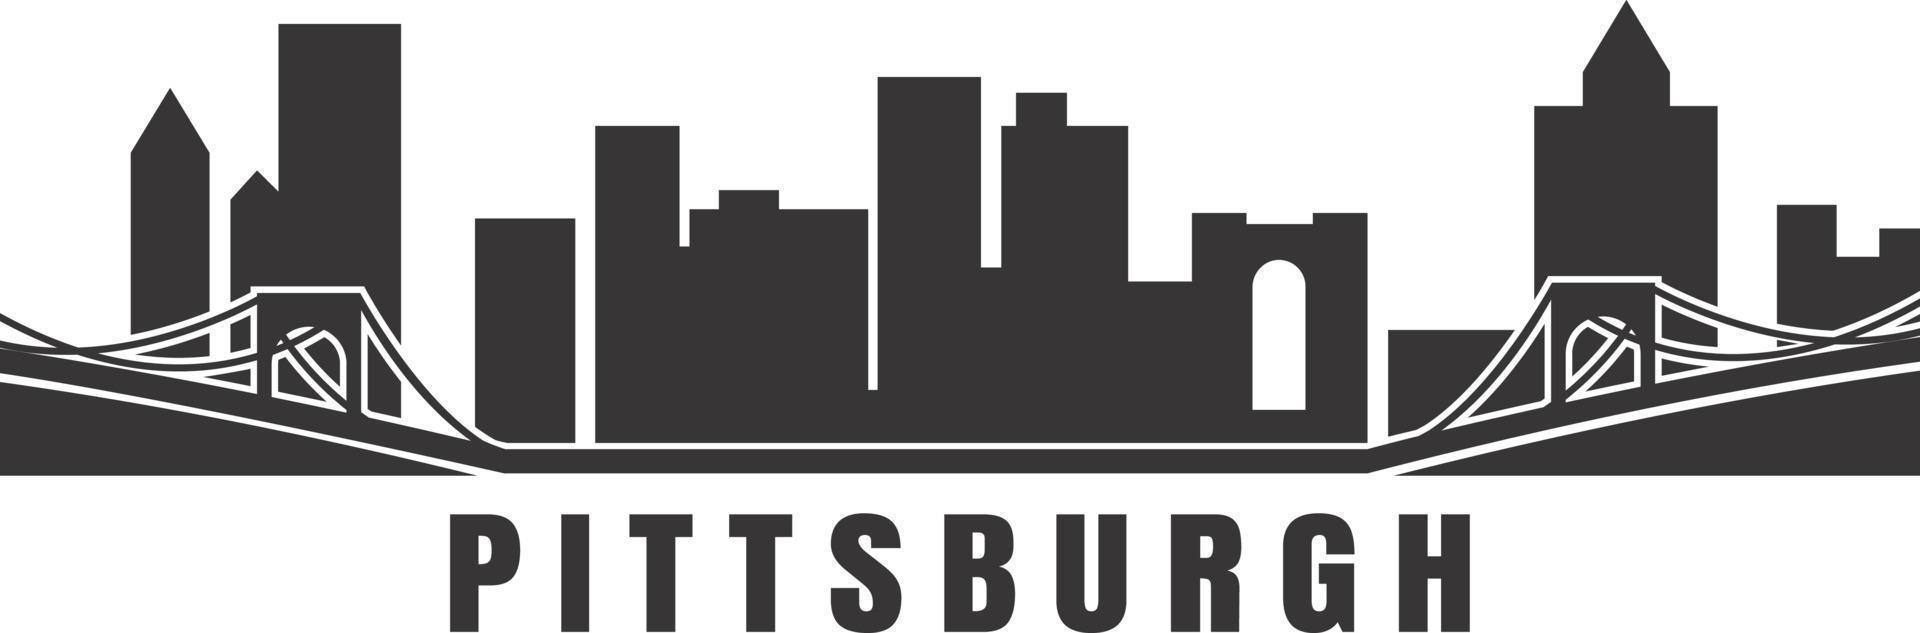 Pittsburg skyline vector